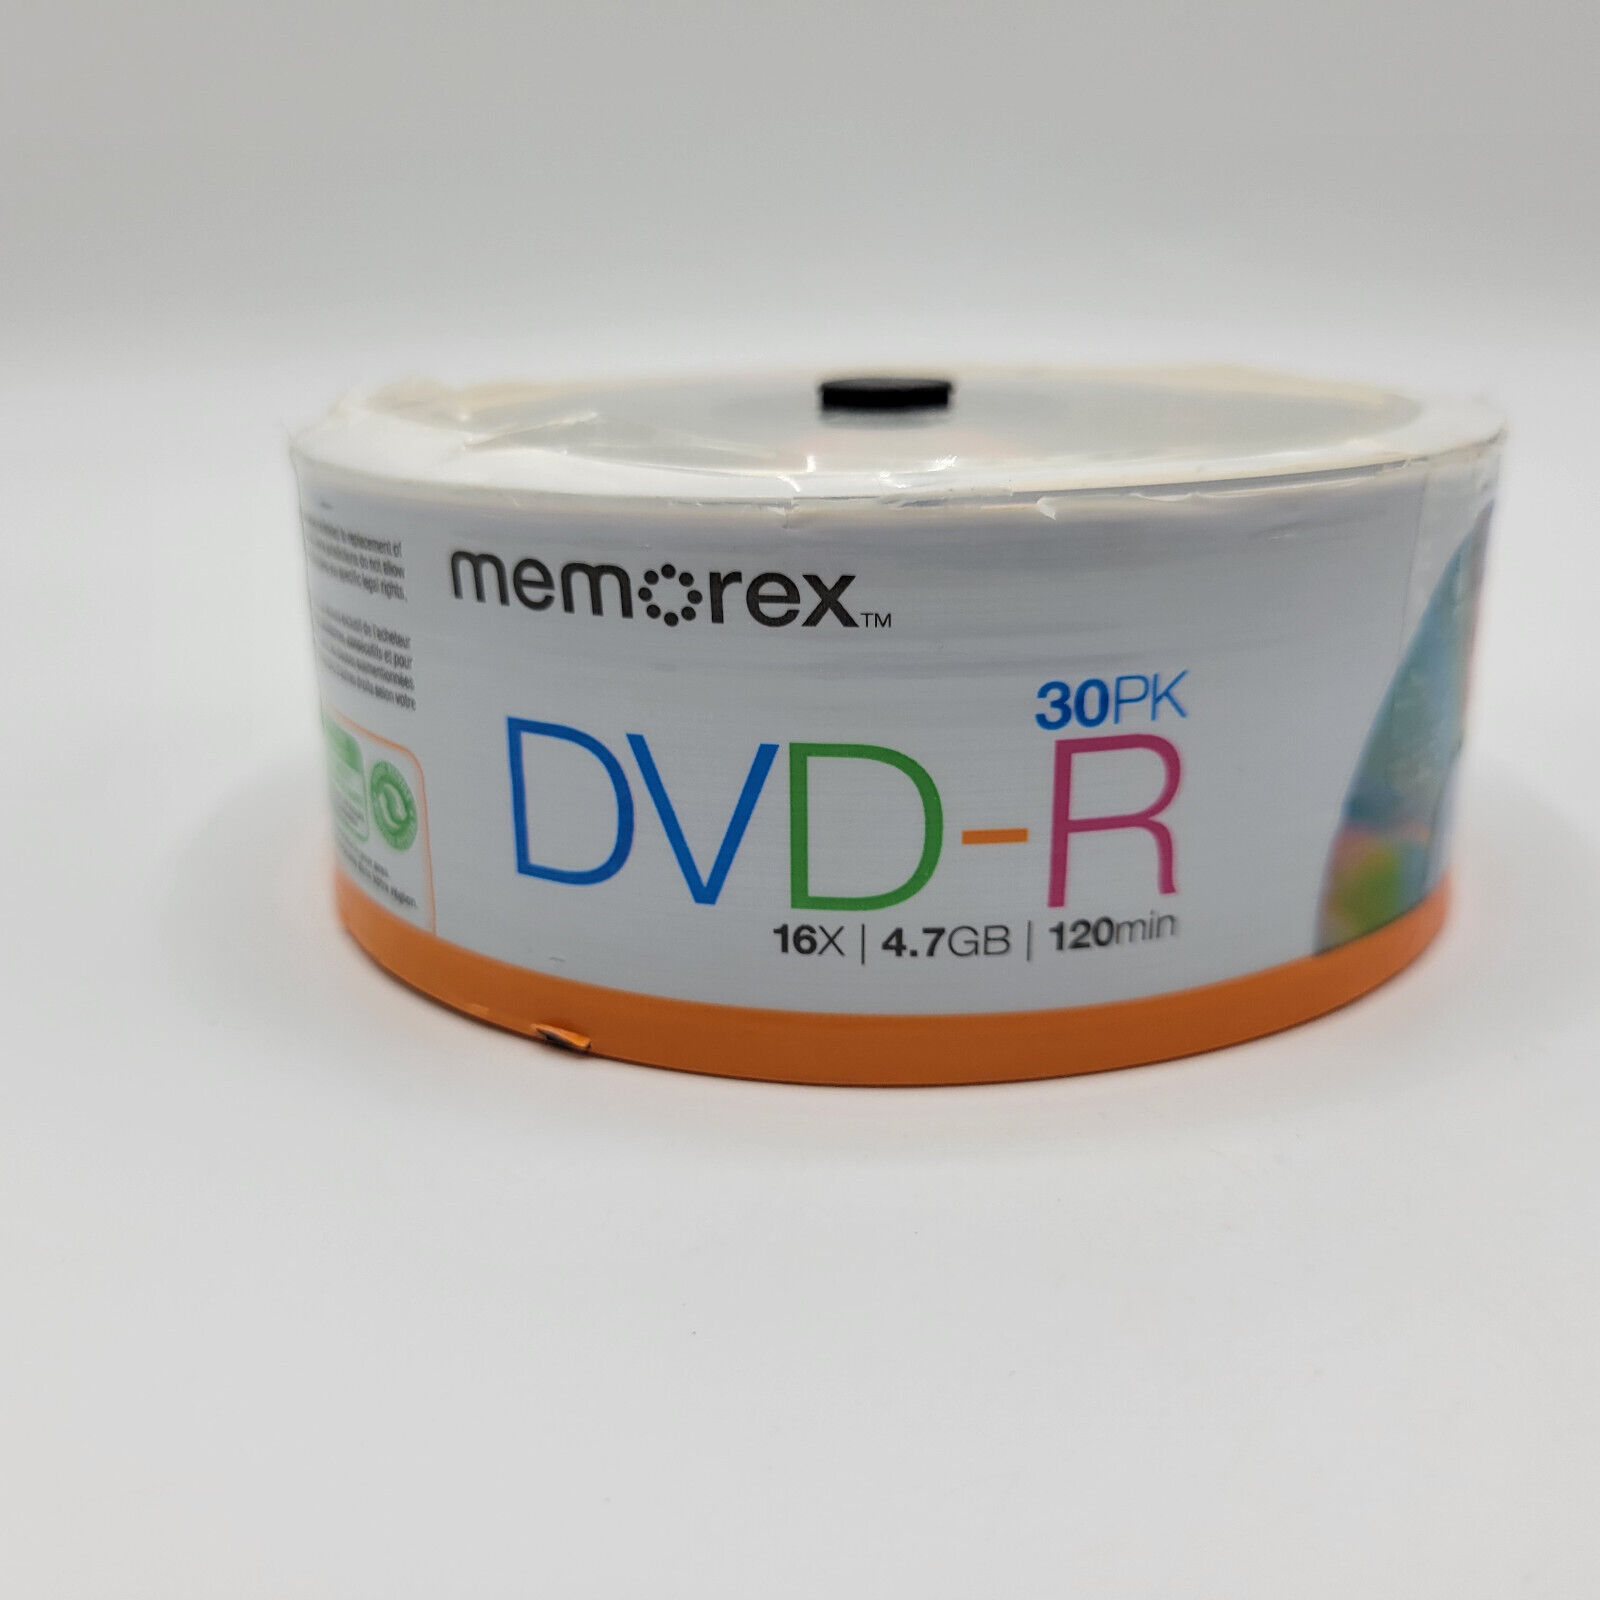 Memorex DVD-R 16X/4.7Go/120 Minute 30PK Sealed Taiwan